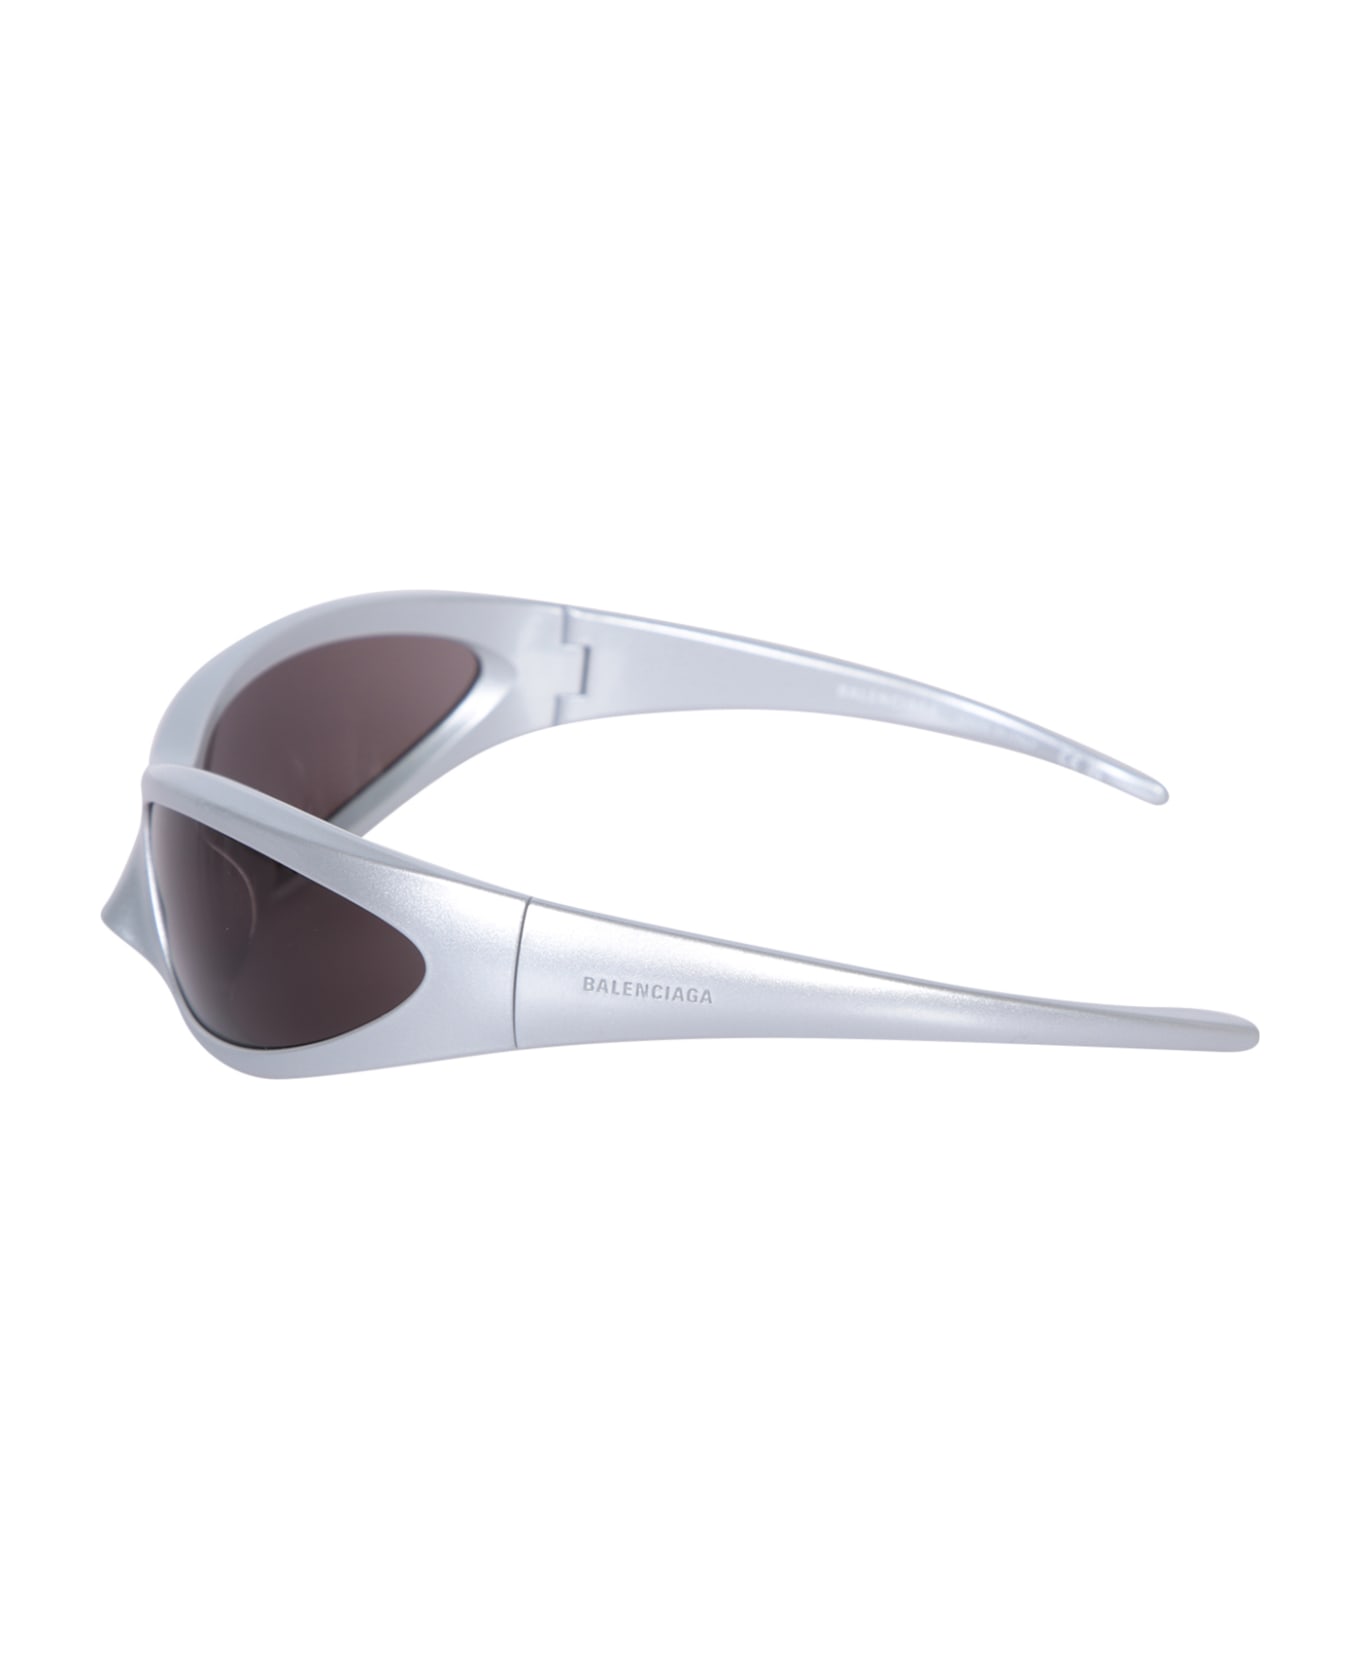 Balenciaga Skin Cat brand Silver Sunglasses - Metallic